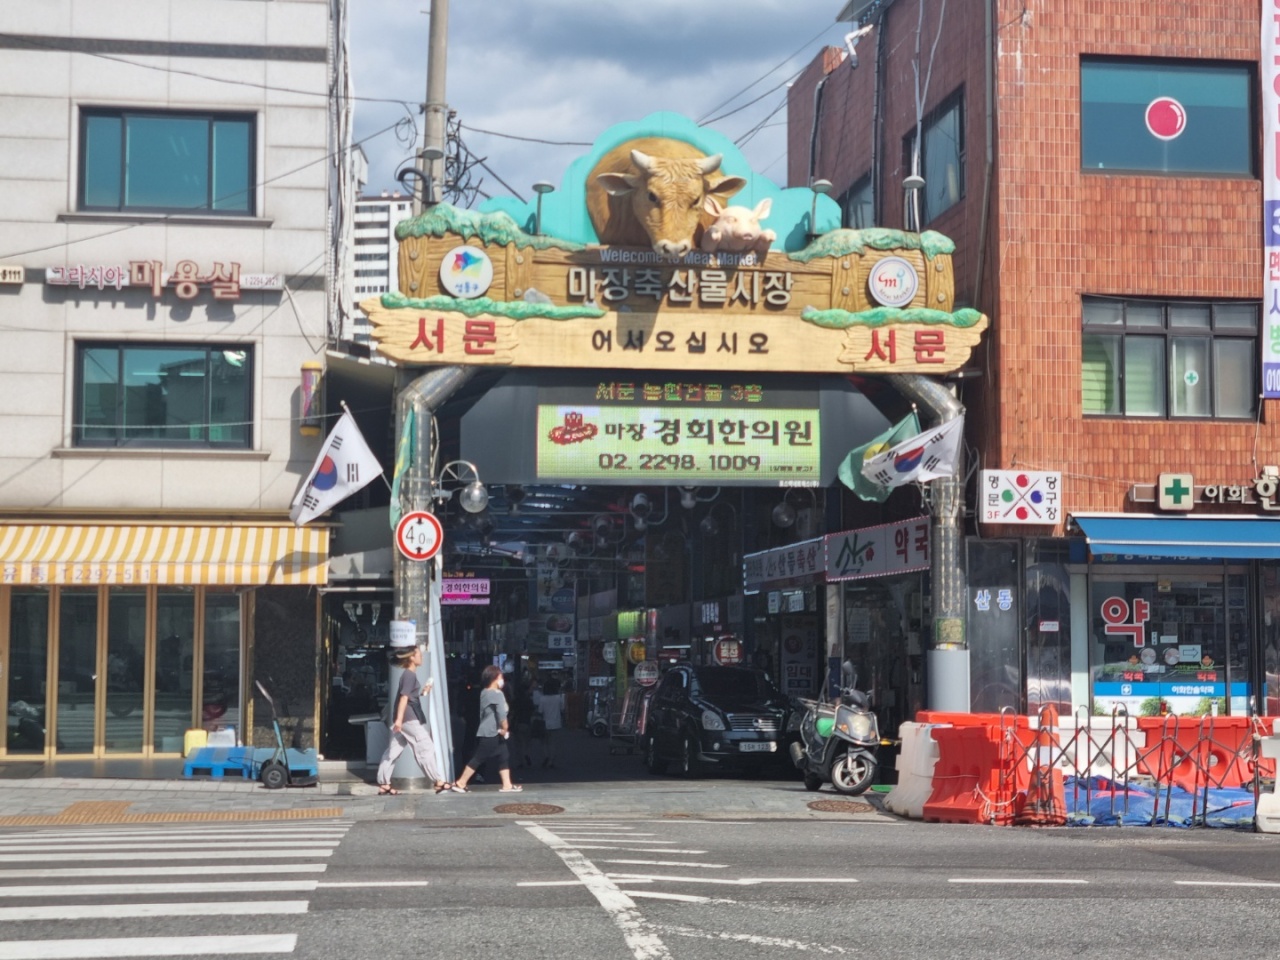 One of the entrances to the Majang Meat Market, Majang-dong, Seongdong-gu, Seoul (The Korea Herald)